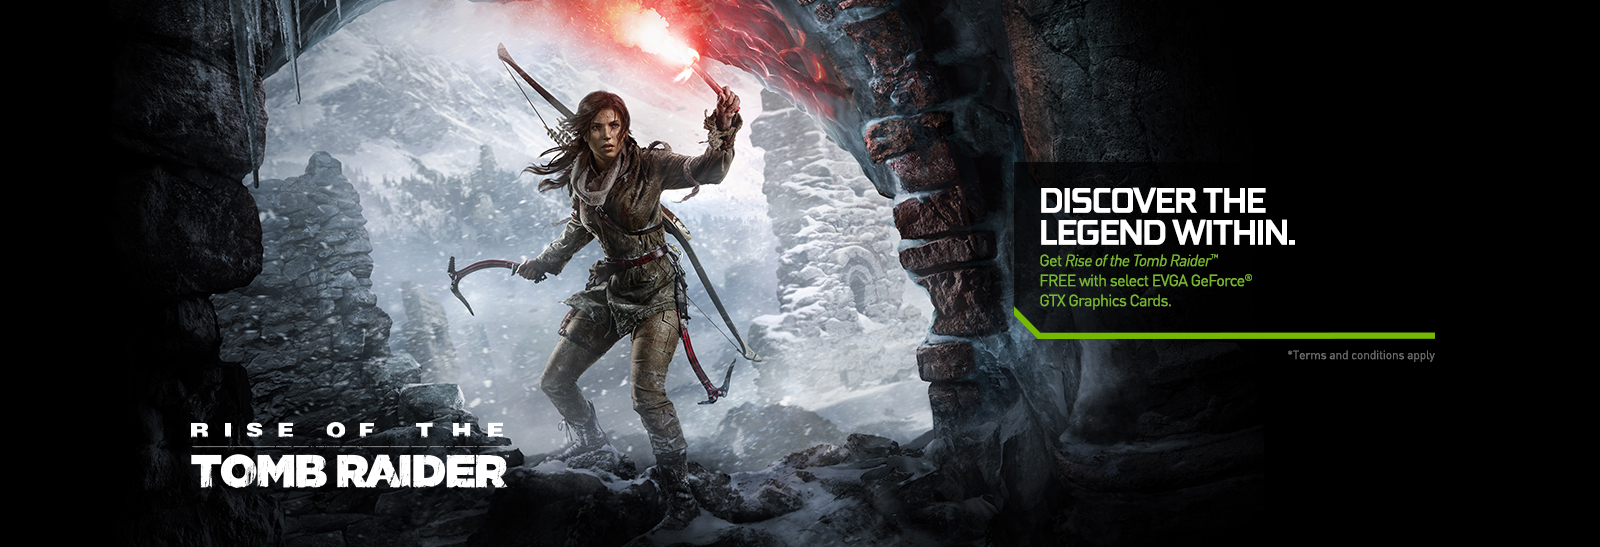 Rise-of-the-Tomb-Raider-header.jpg